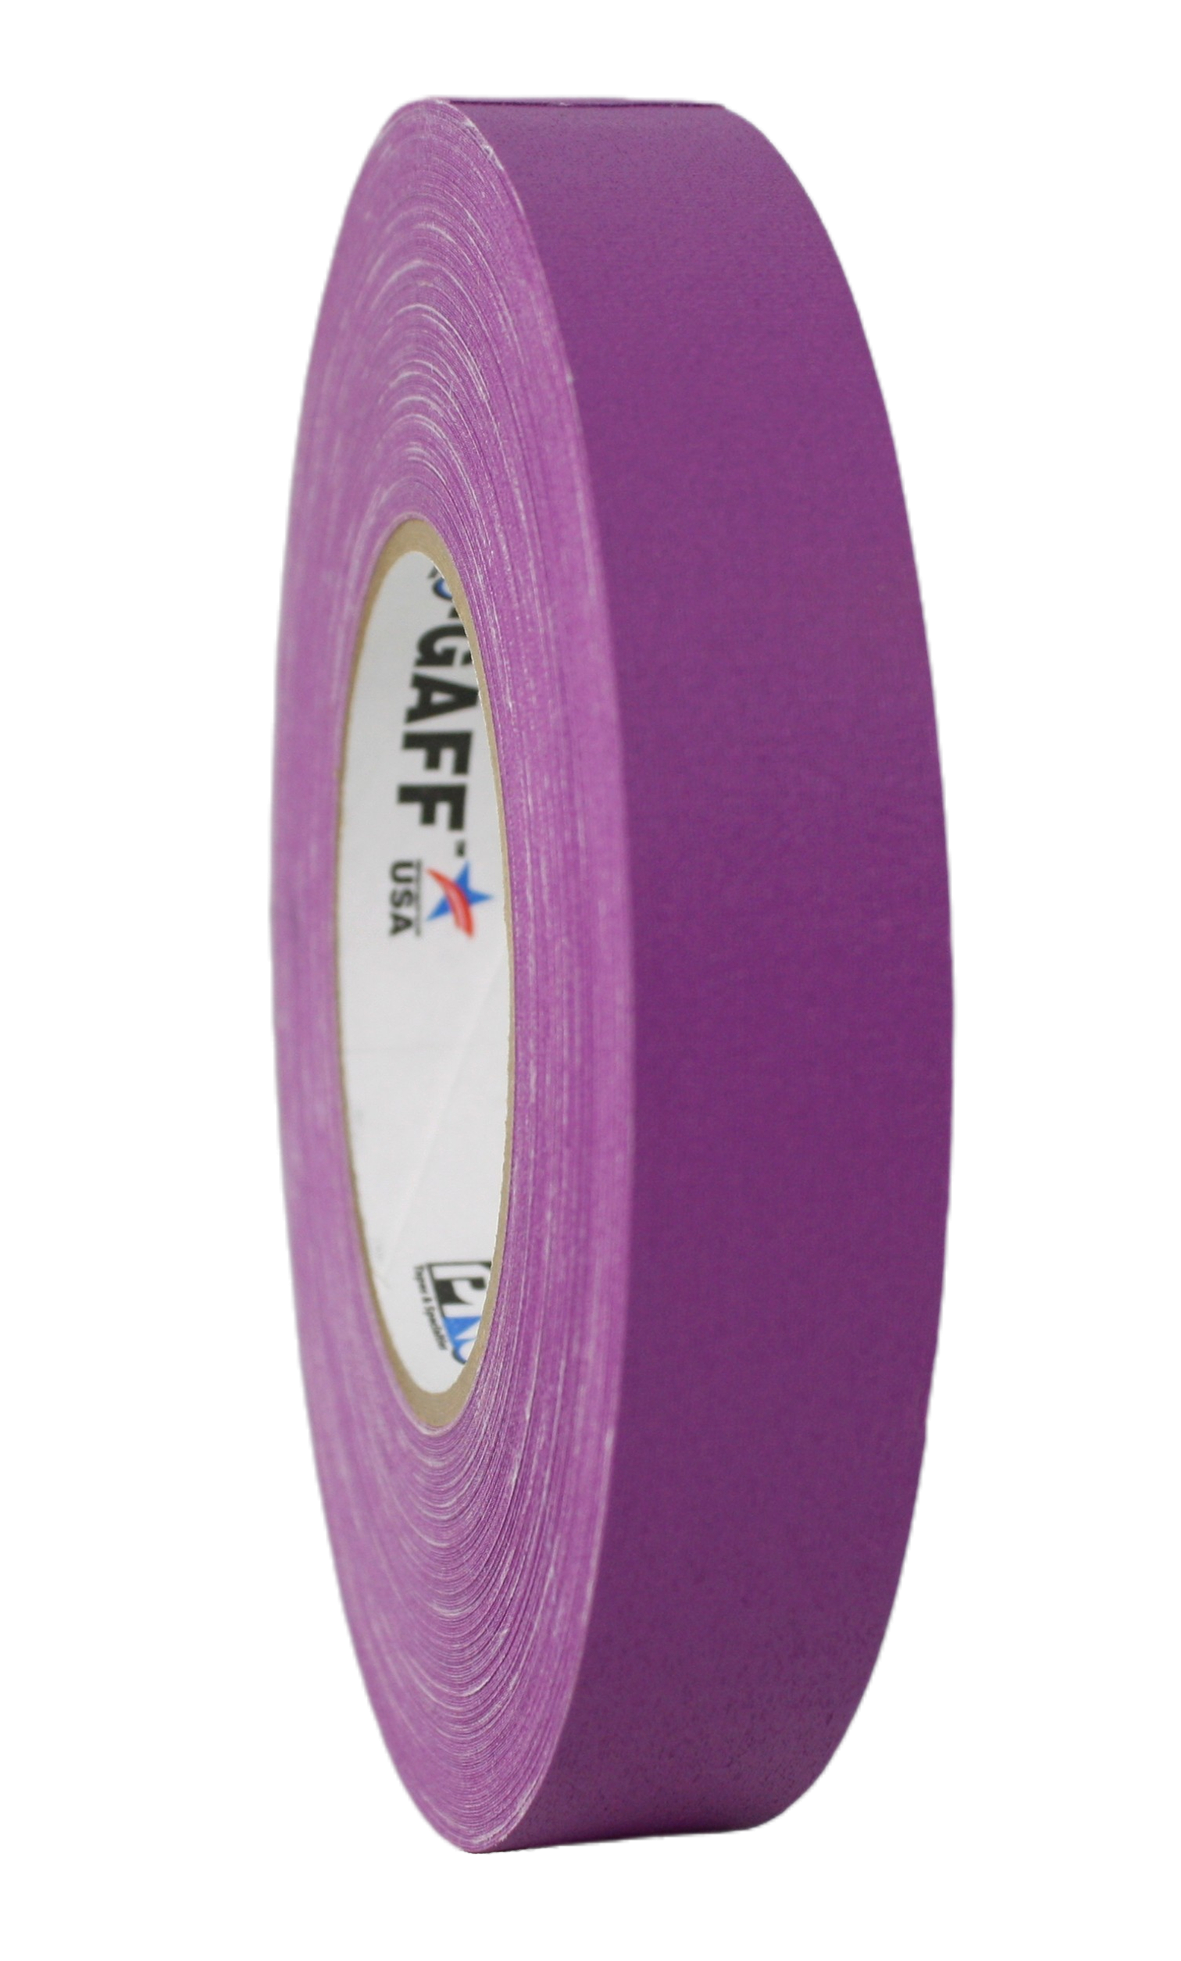 Pro Gaff 1" Purple, 50m roll, side view